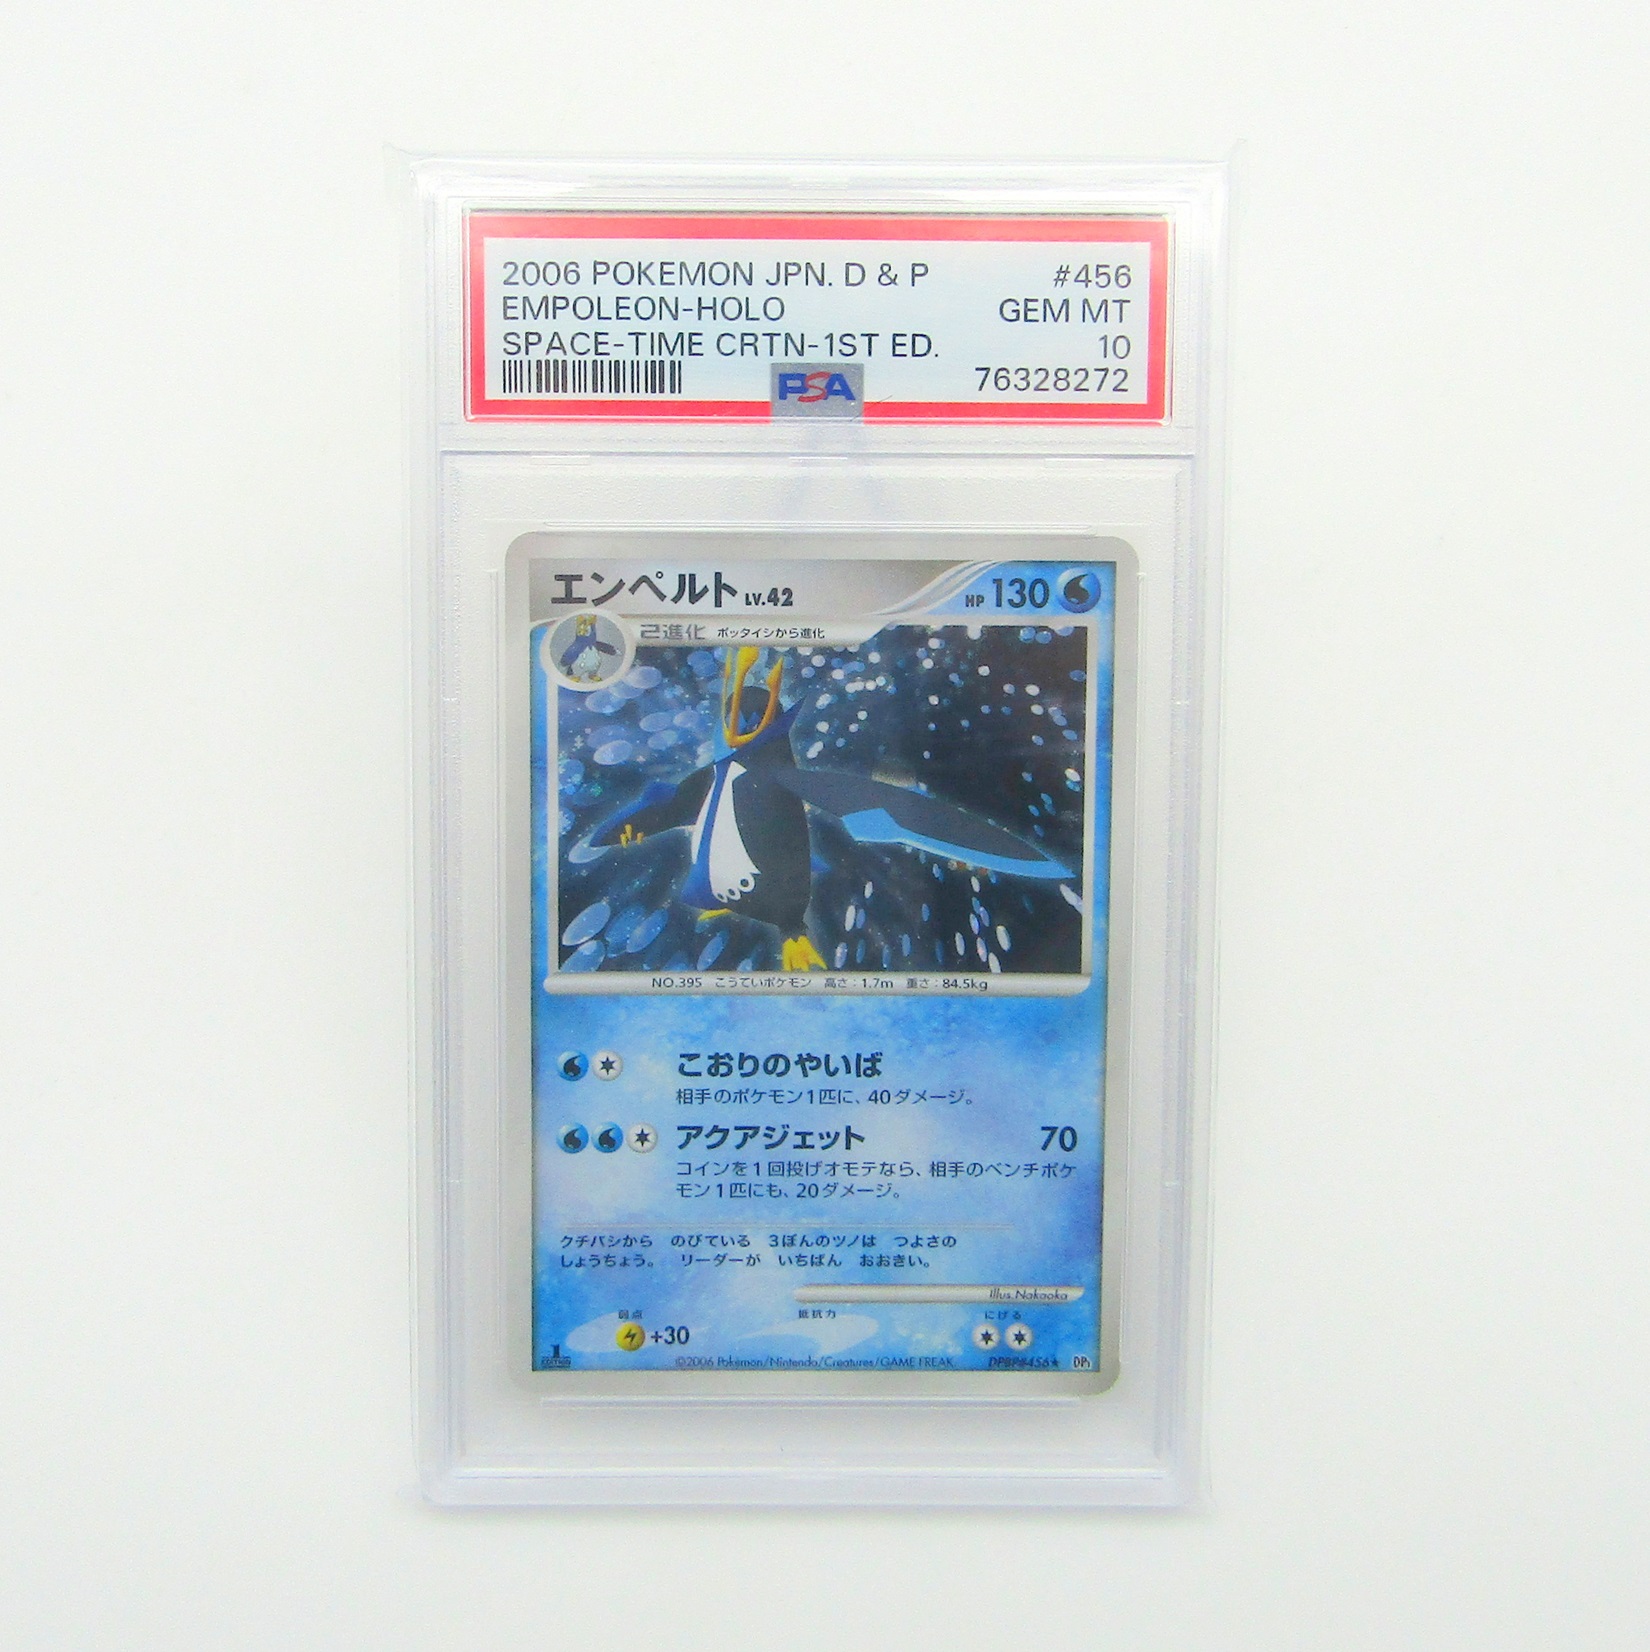 Pokémon card. Empoleon HOLO 1st Japanese. Space-Time Creation. PSA 10